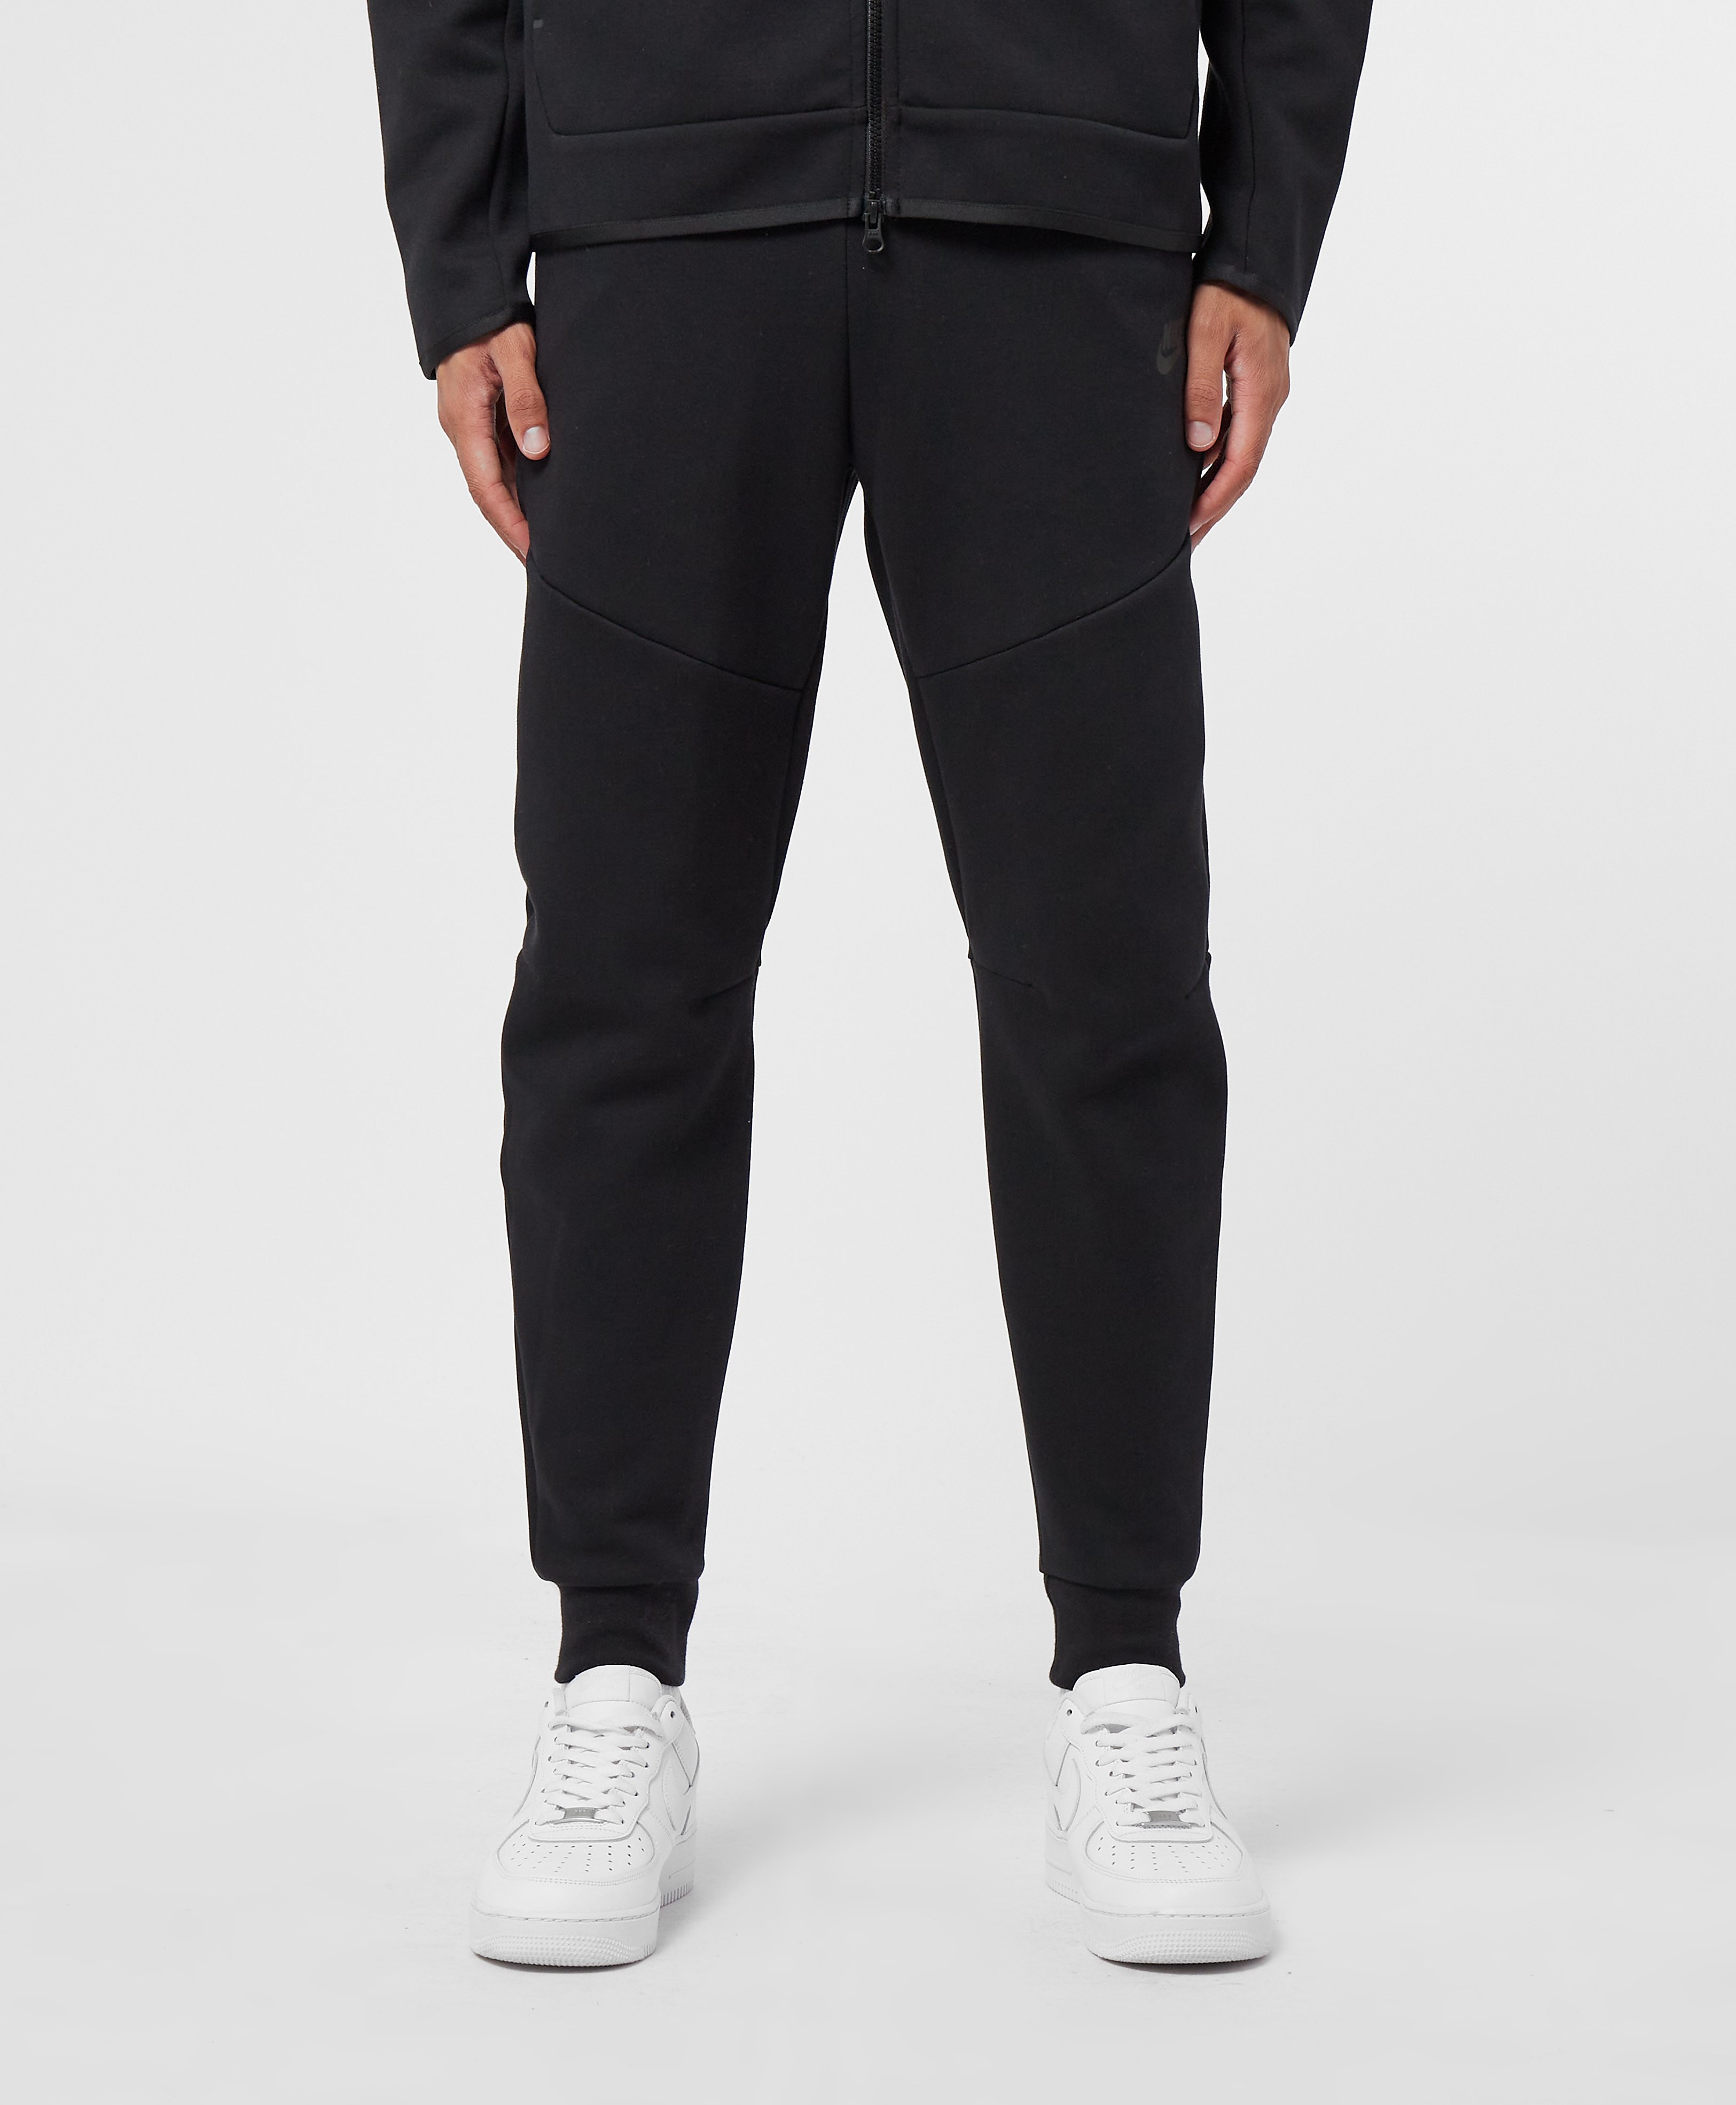 Nike Men's Tech Fleece Joggers - Black, Black